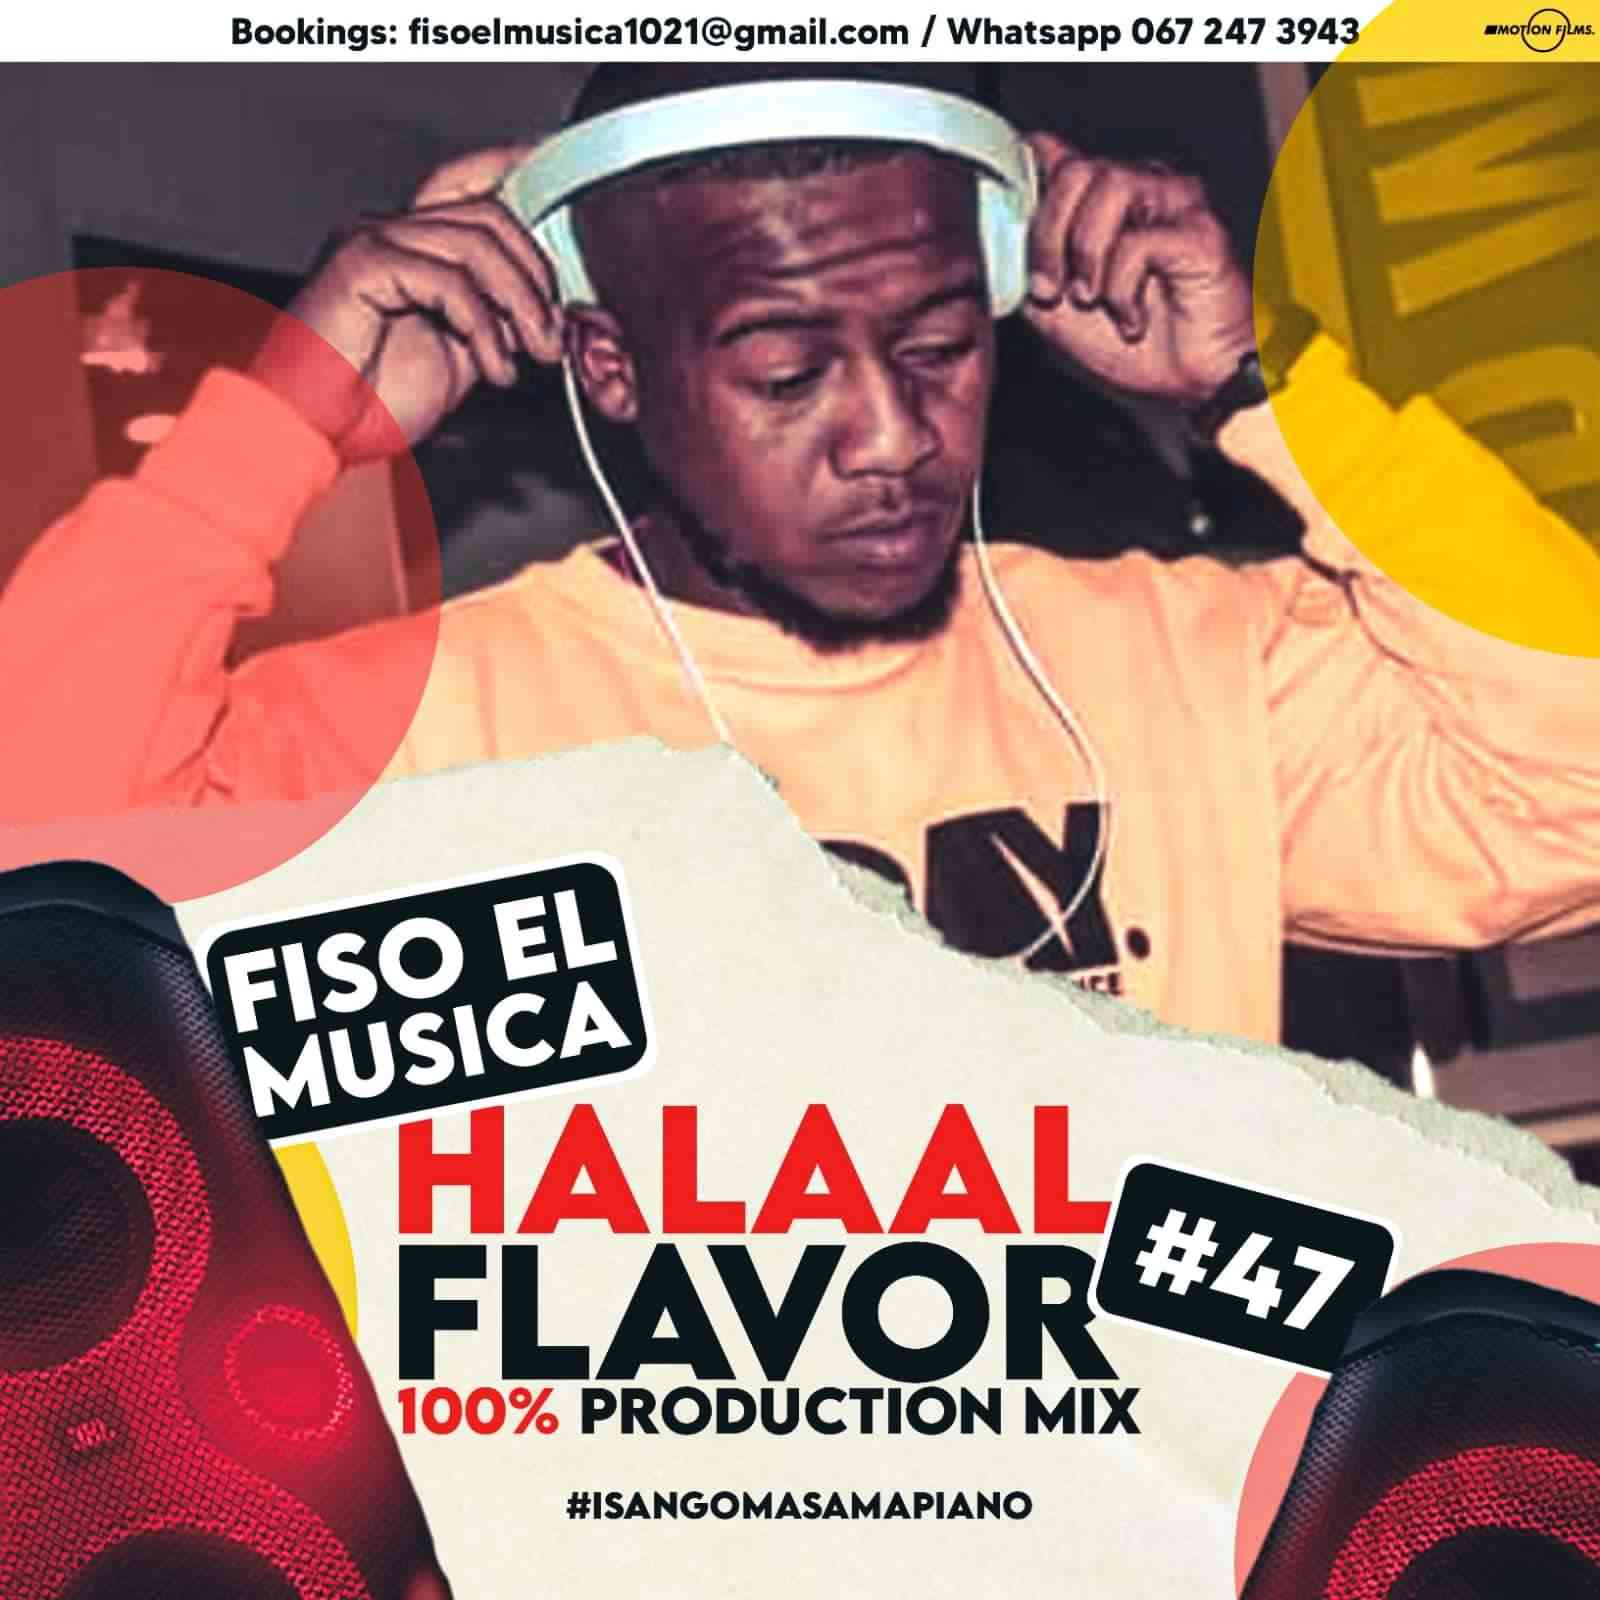 Fiso El Musica - Halaal Flavour #047 Mix (100% Production Mix)